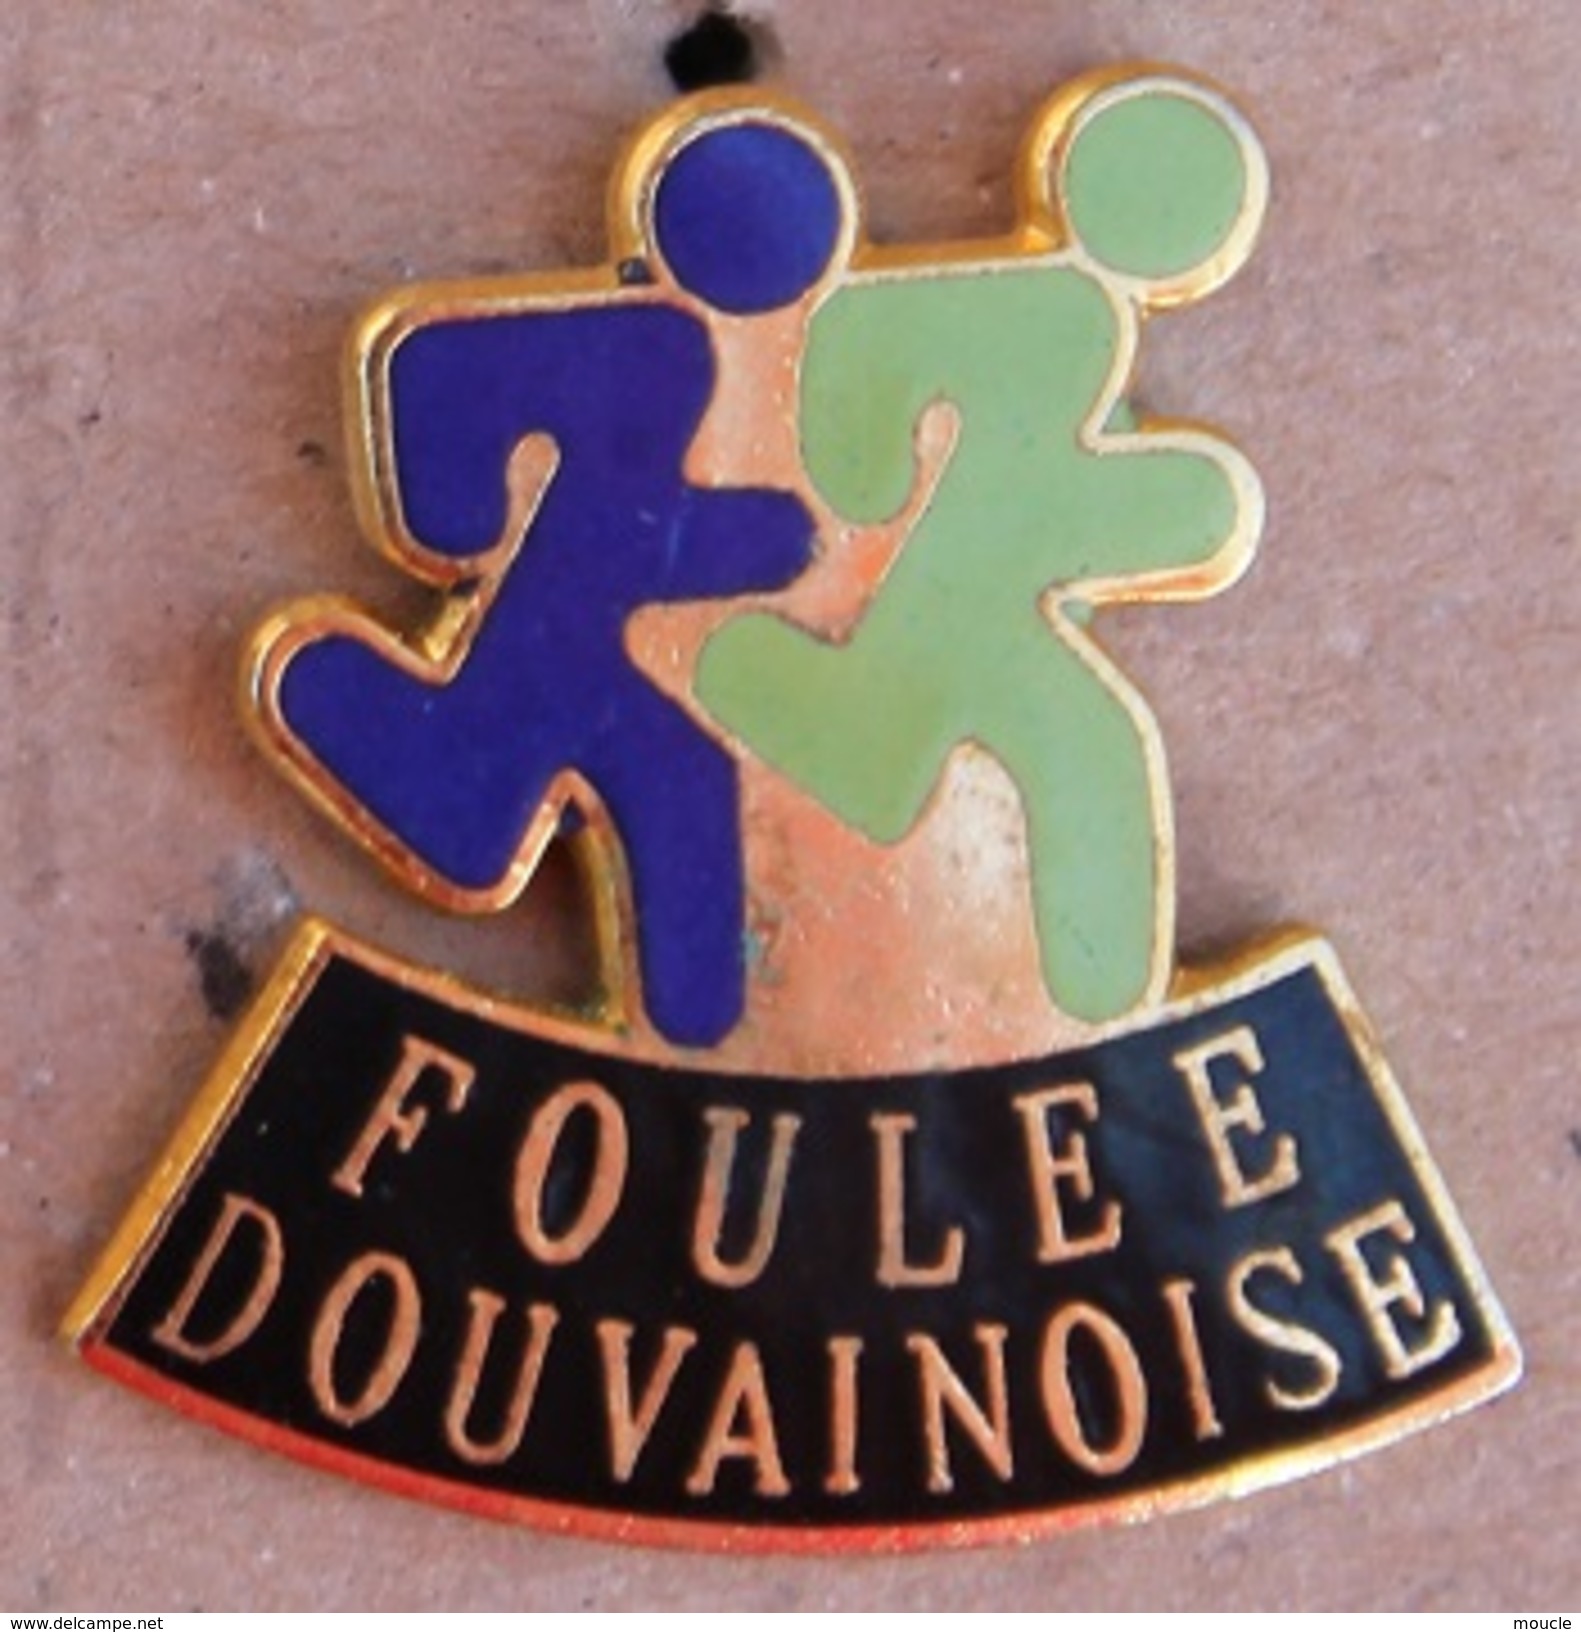 FOULEE DOUVAINOISE - DOUVAINE - COUREURS -    (17) - Athlétisme